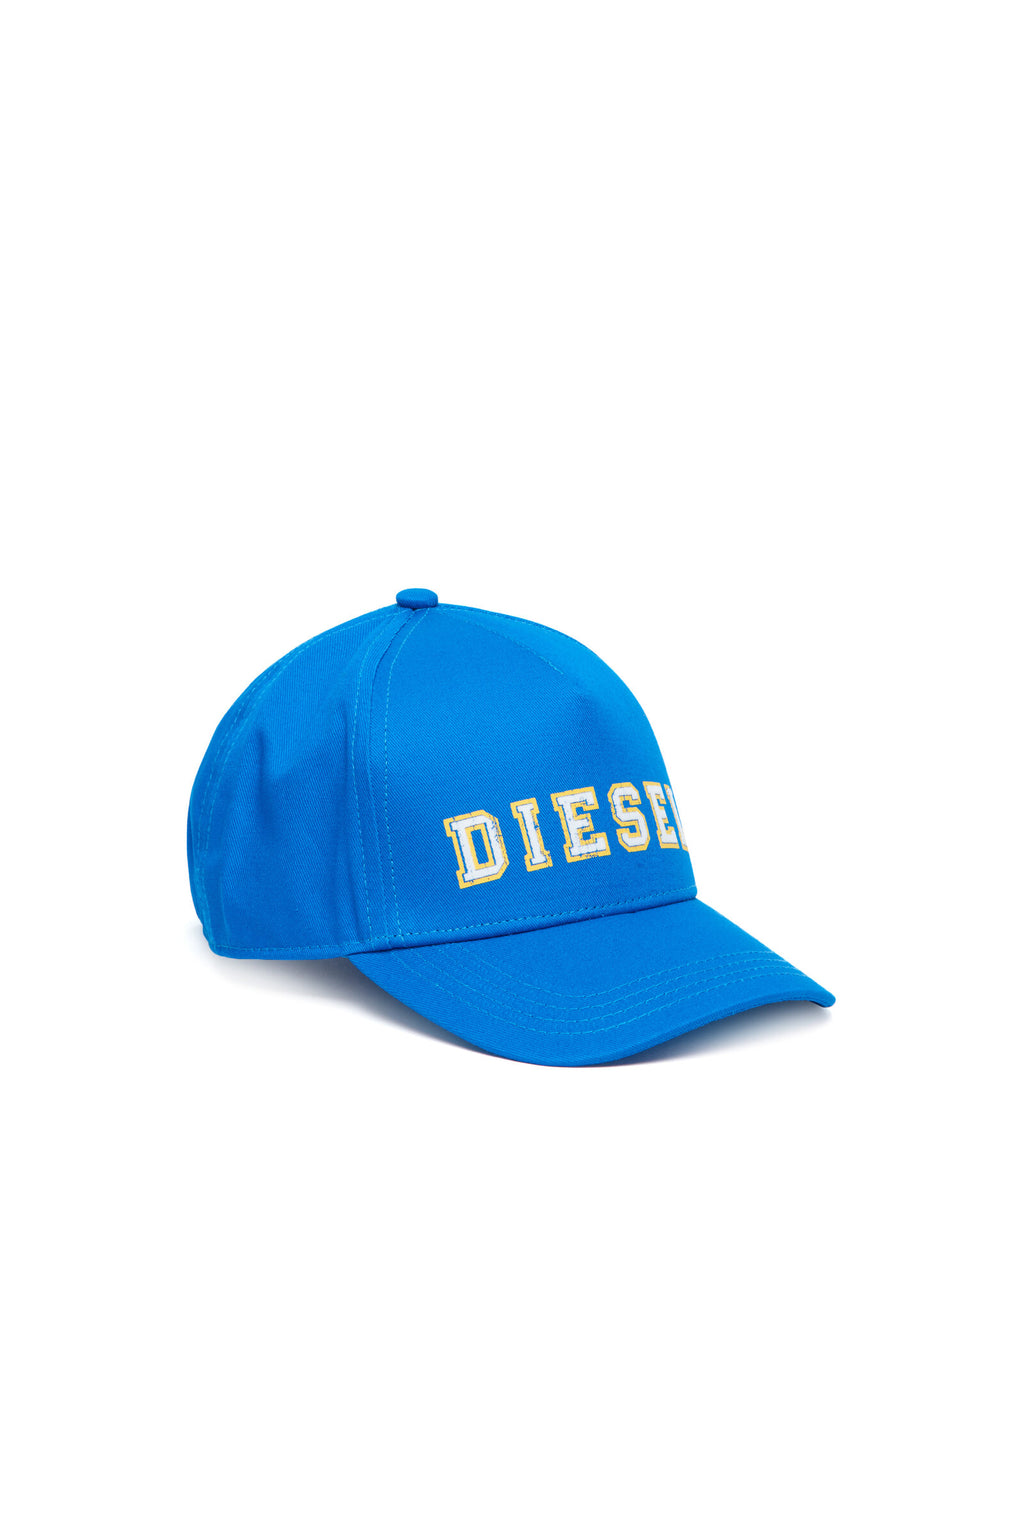 Blue gabardine baseball hat with logo